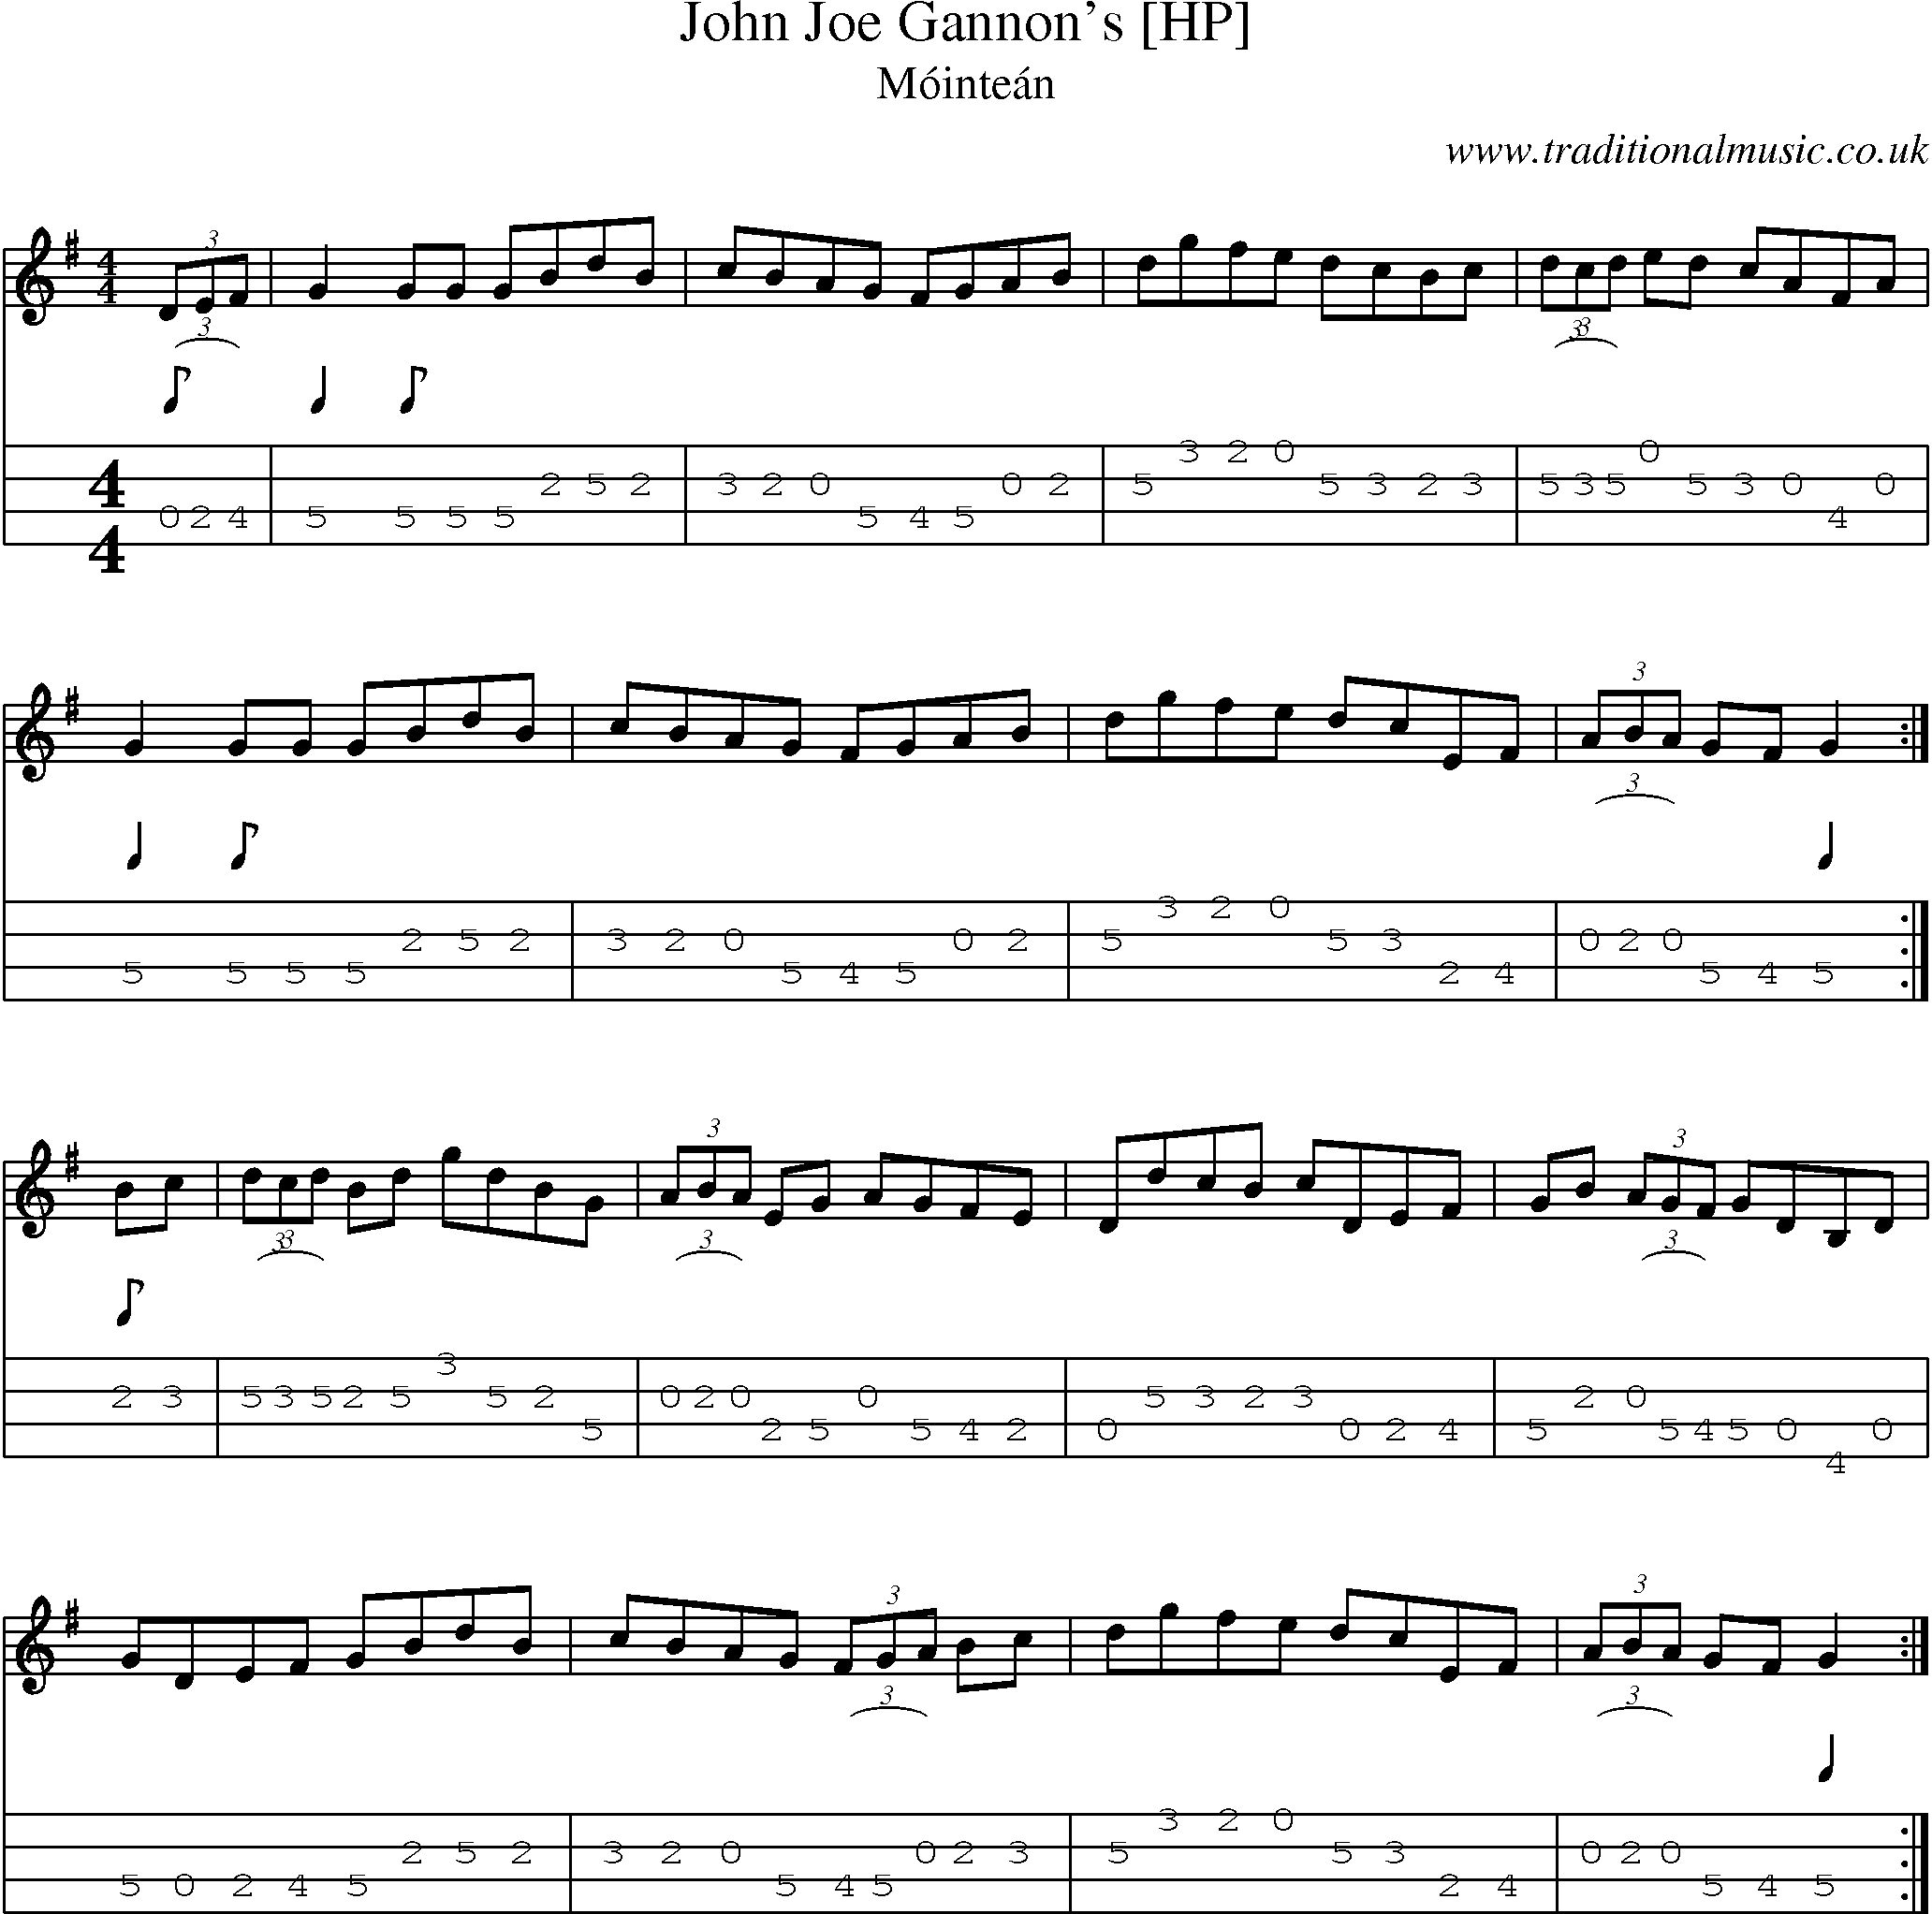 Music Score and Mandolin Tabs for John Joe Gannons []